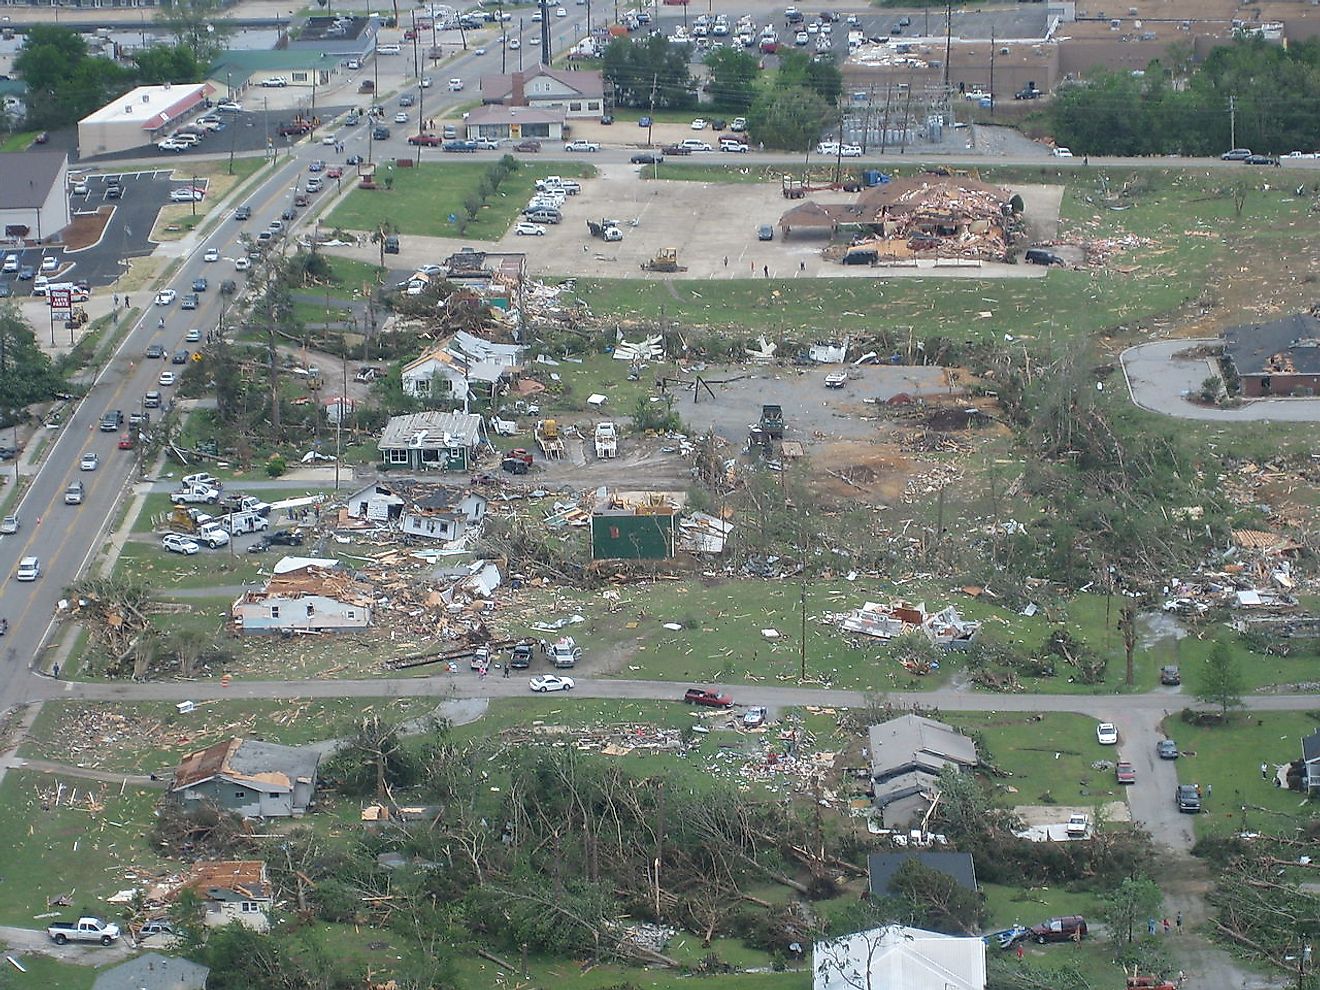 Aerial view of tornado damage in Trenton, Georgia. Image credit: NWS Peachtree City, GA/Public domain